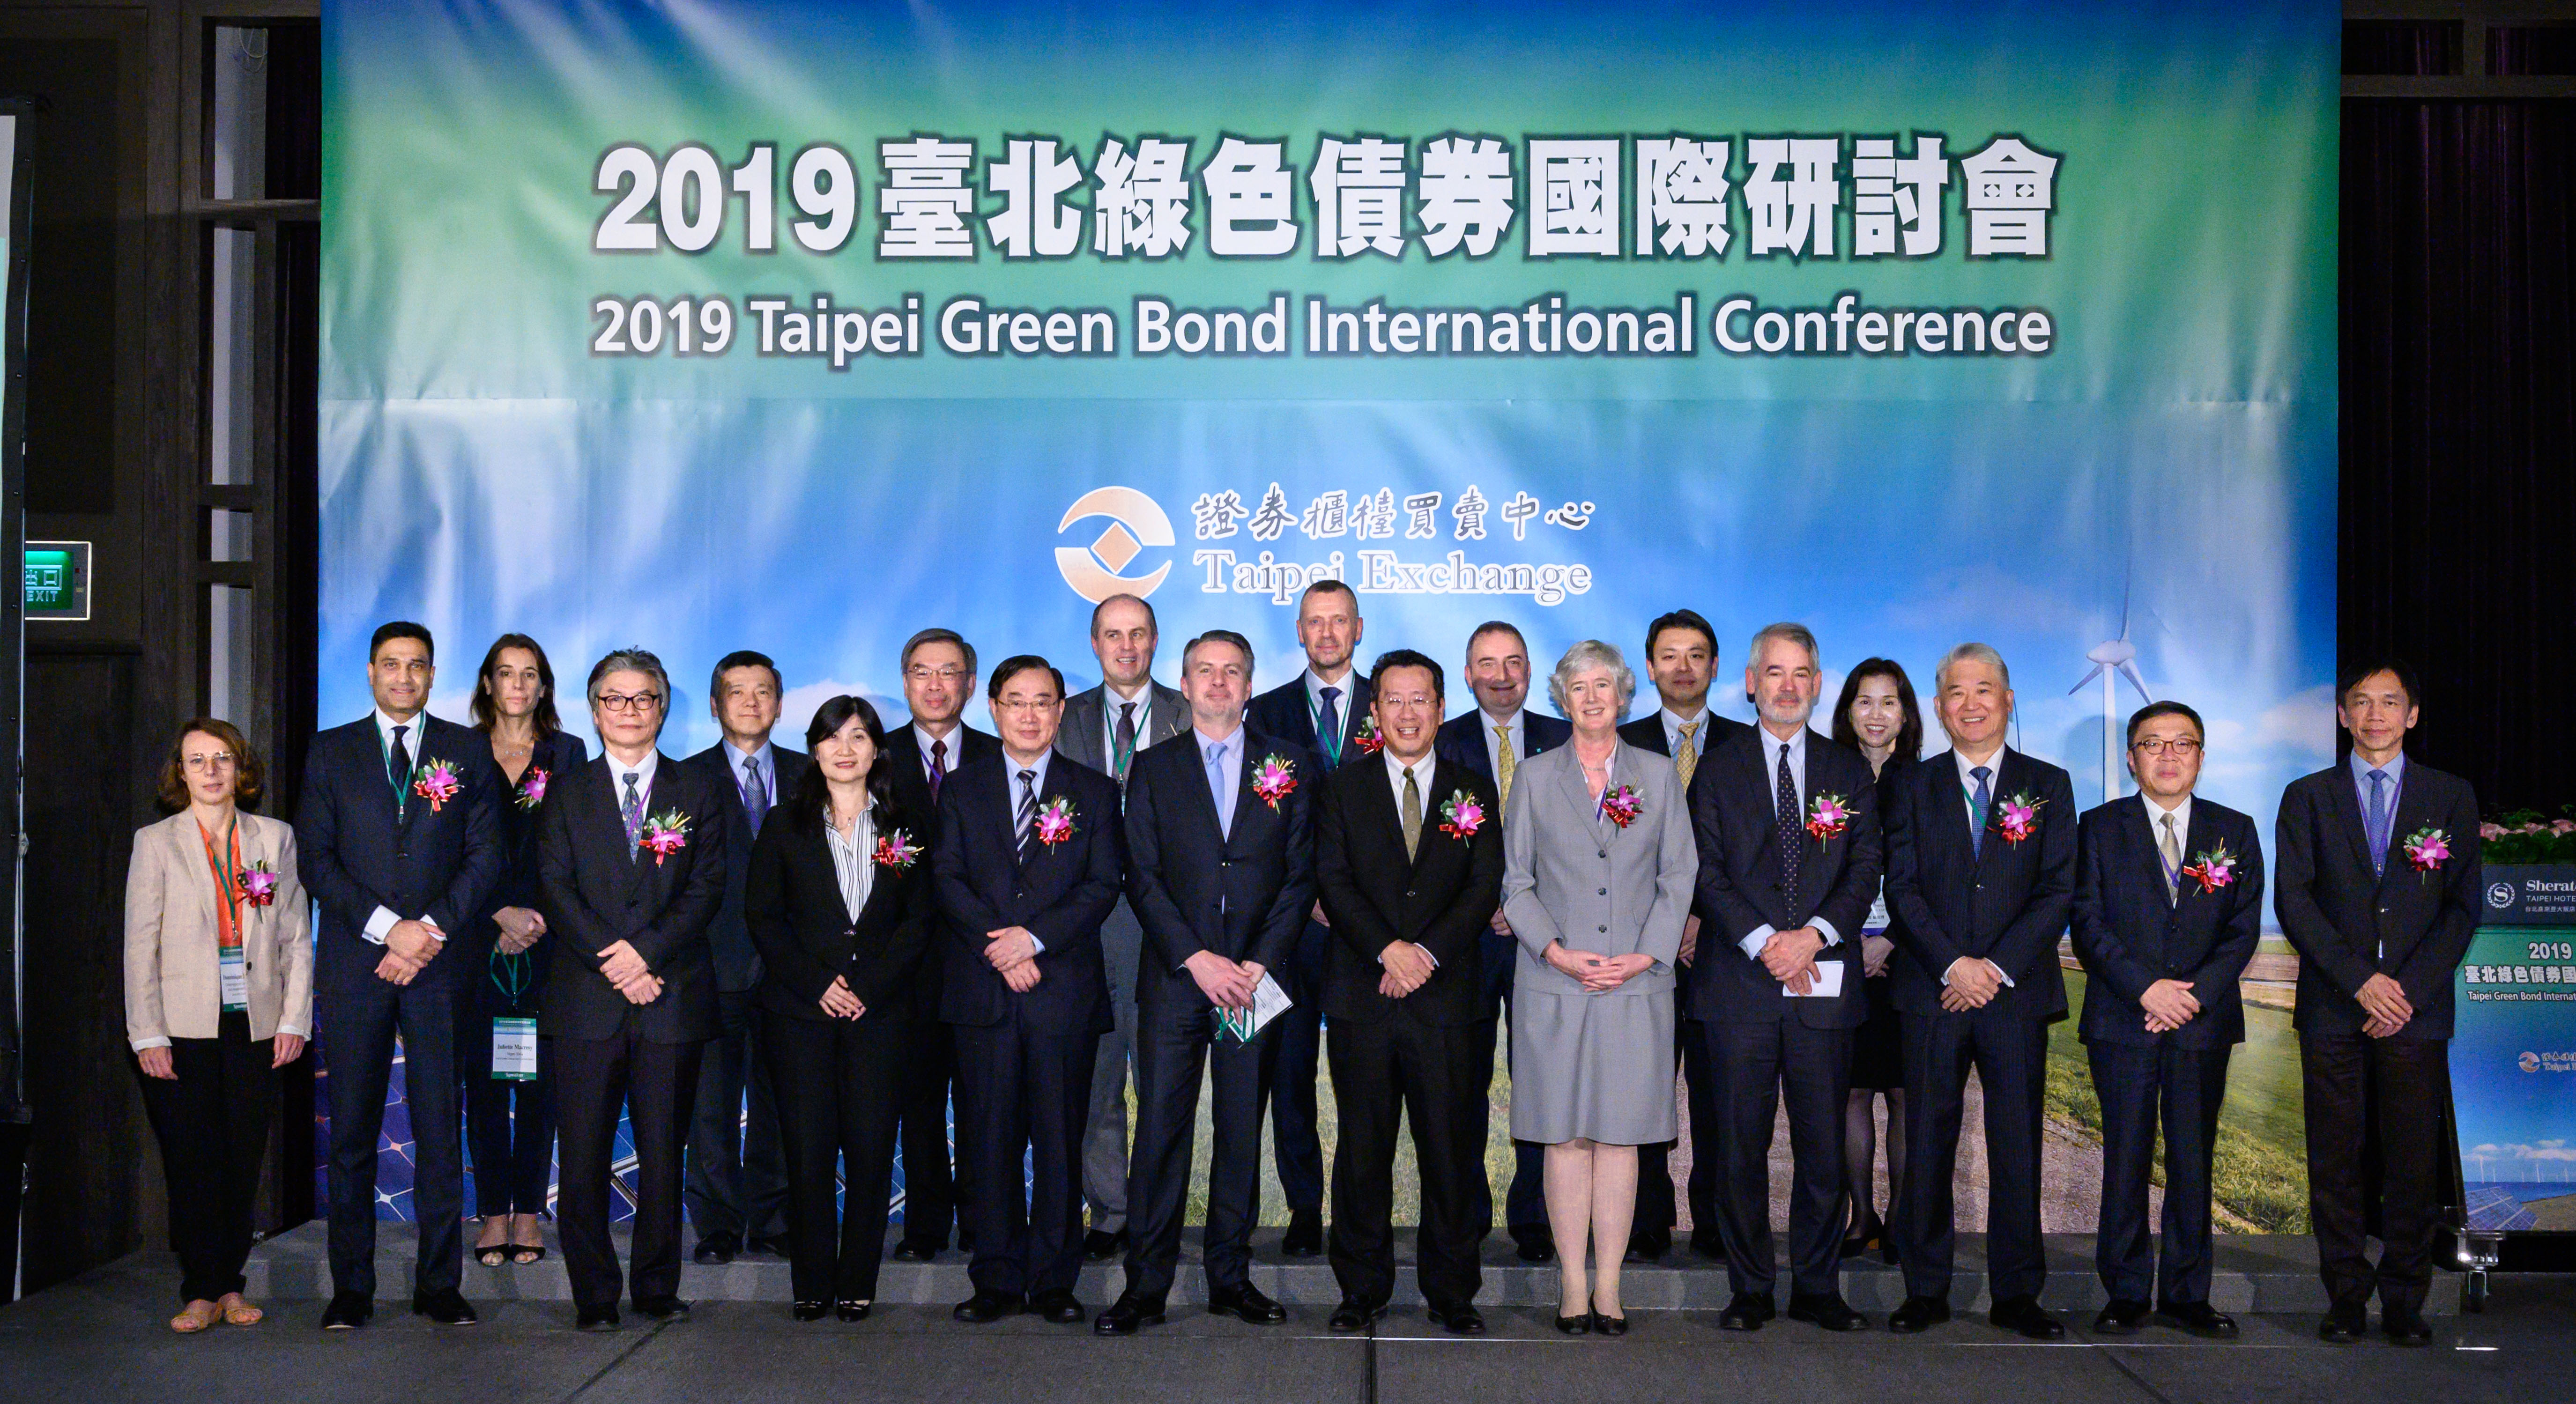 "Taipei Green Bond International Conference" on November 6, 2019